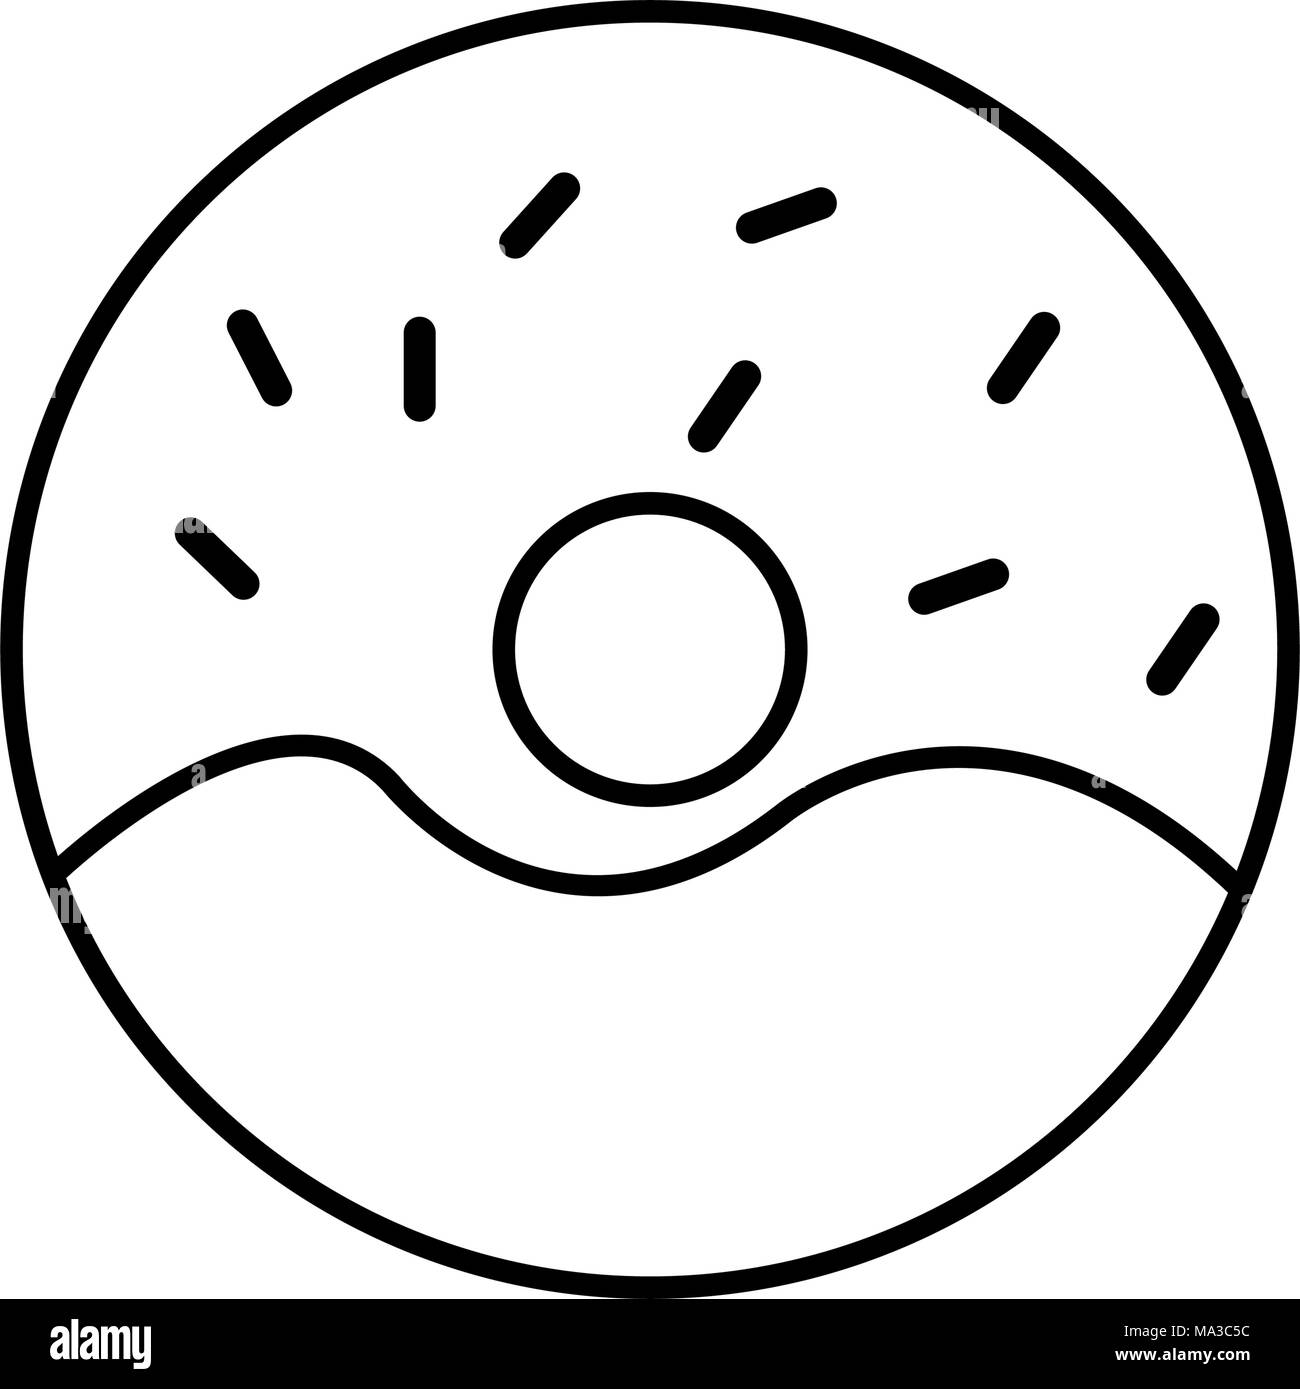 donut icon Stock Vector